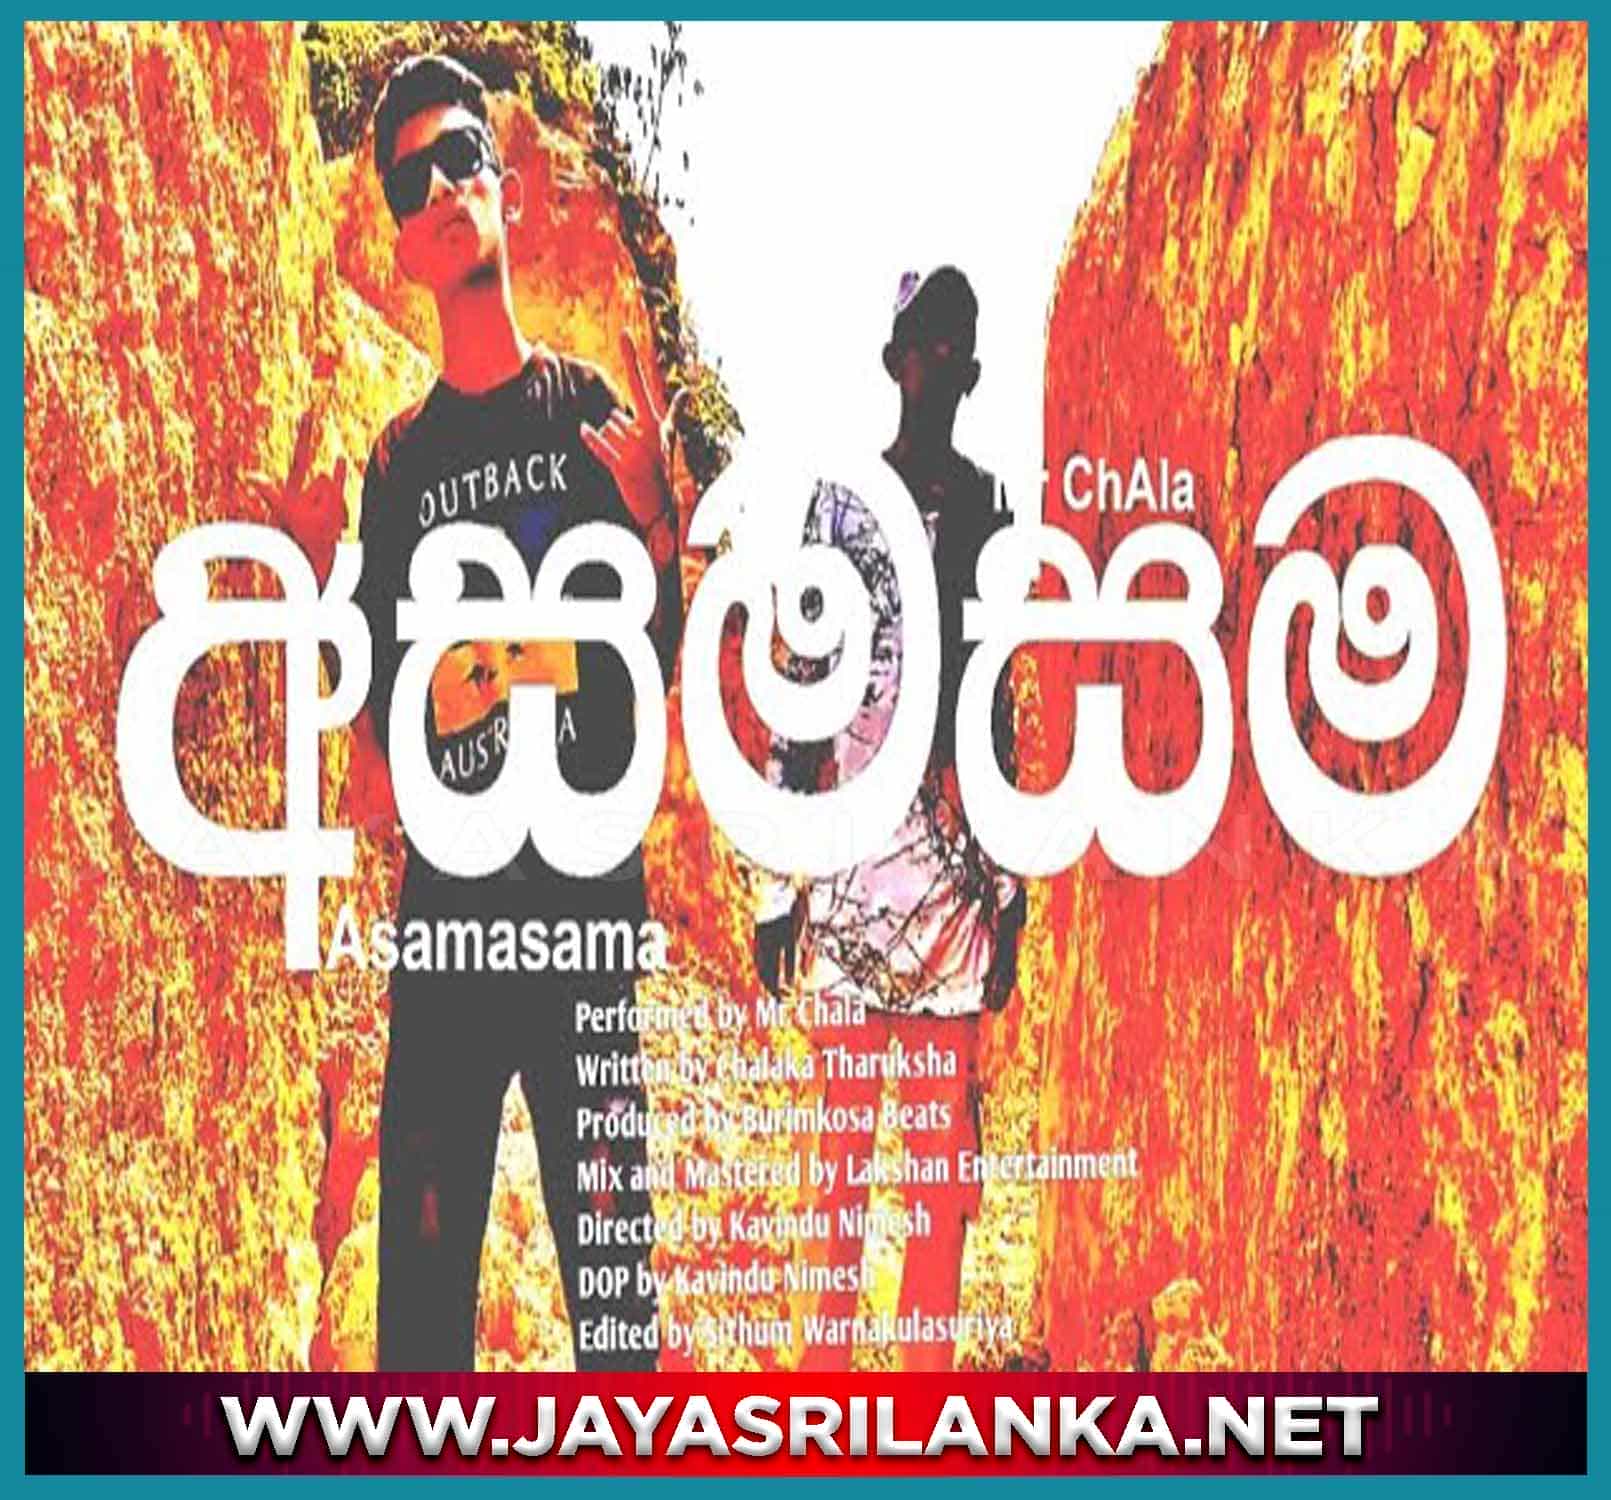 Asamasama Sinhala Rap